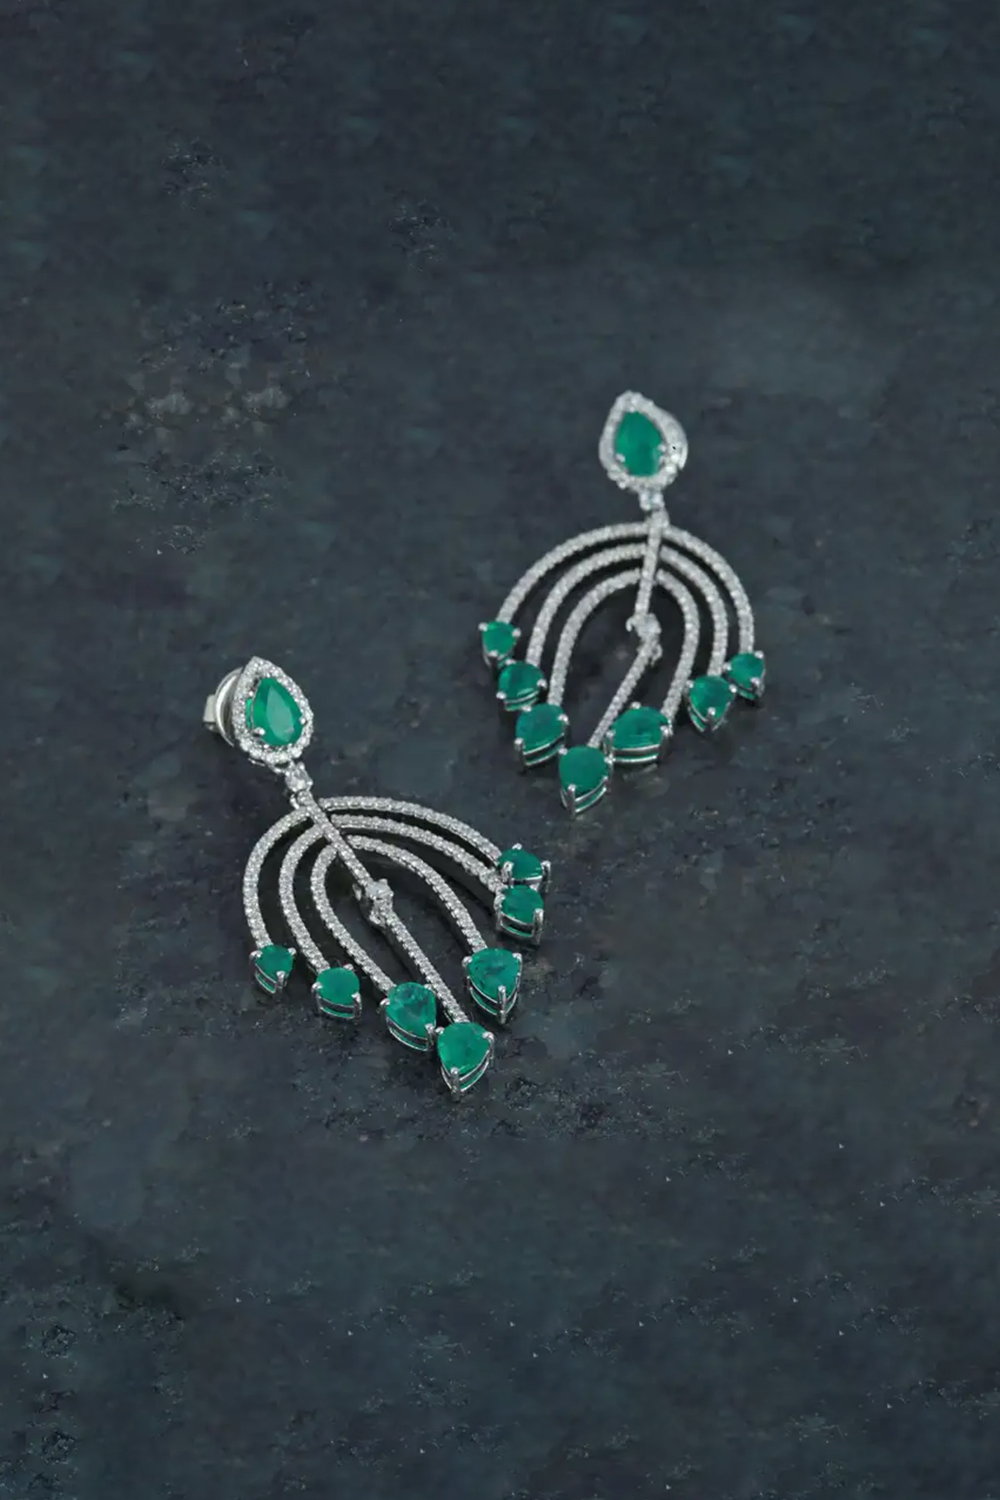 Emerald Dangle Earrings with Diamond in 18k Gold